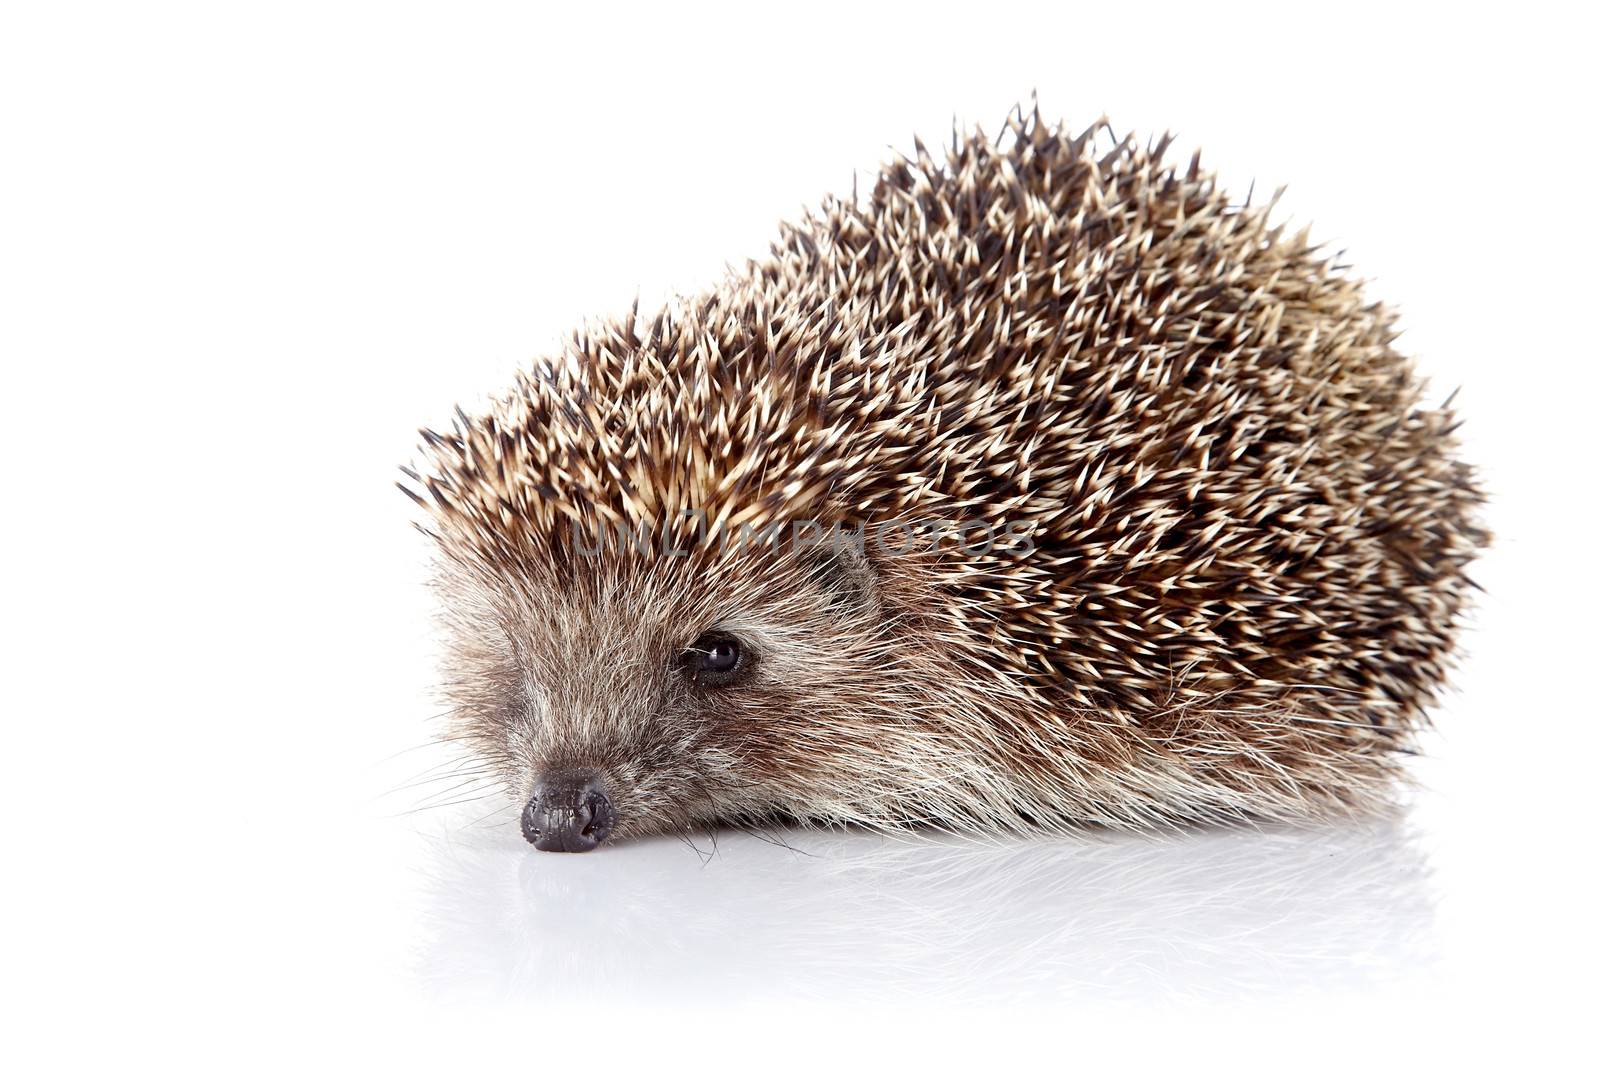 Prickly hedgehog by Azaliya